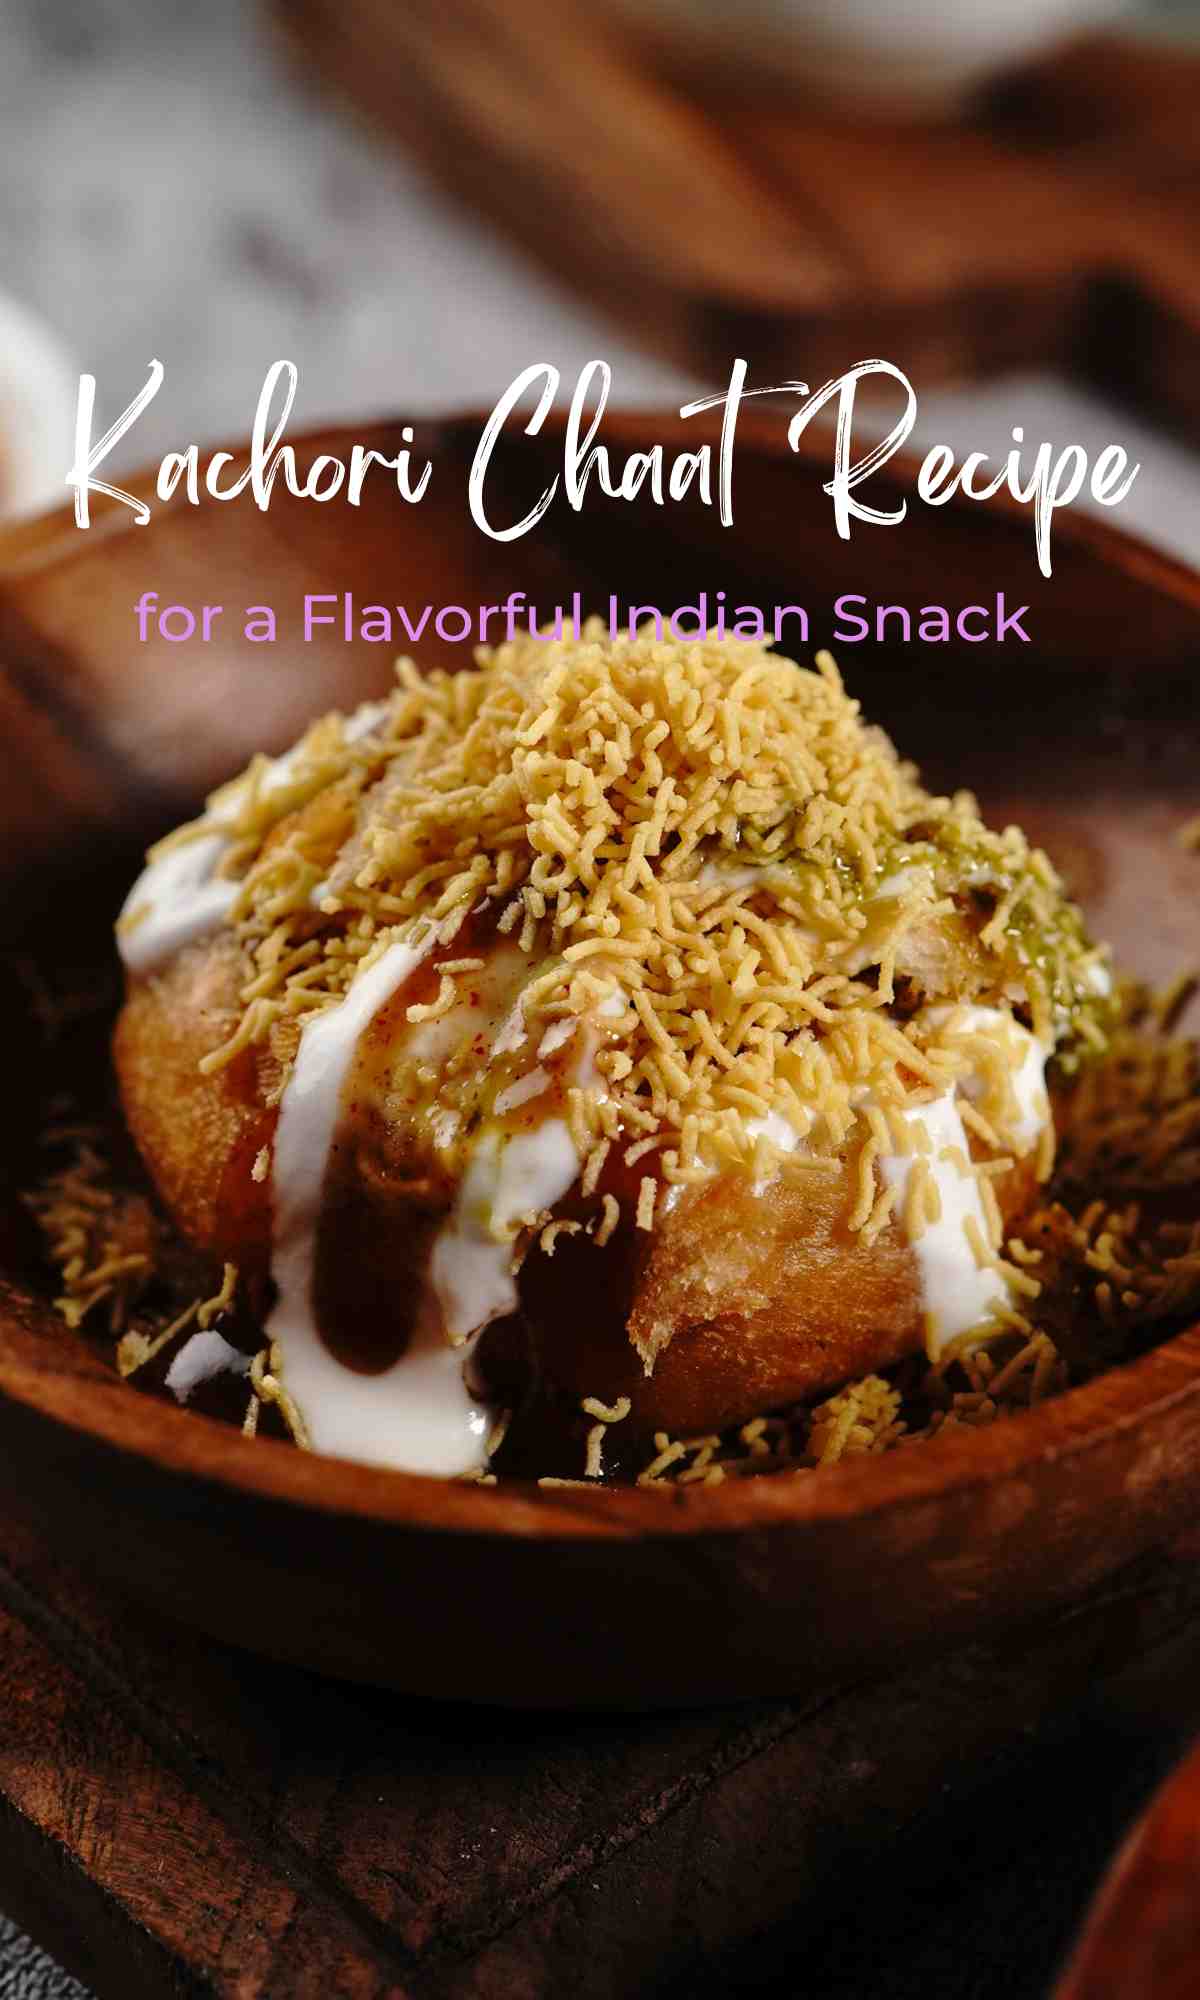 Kachori Chaat Recipe